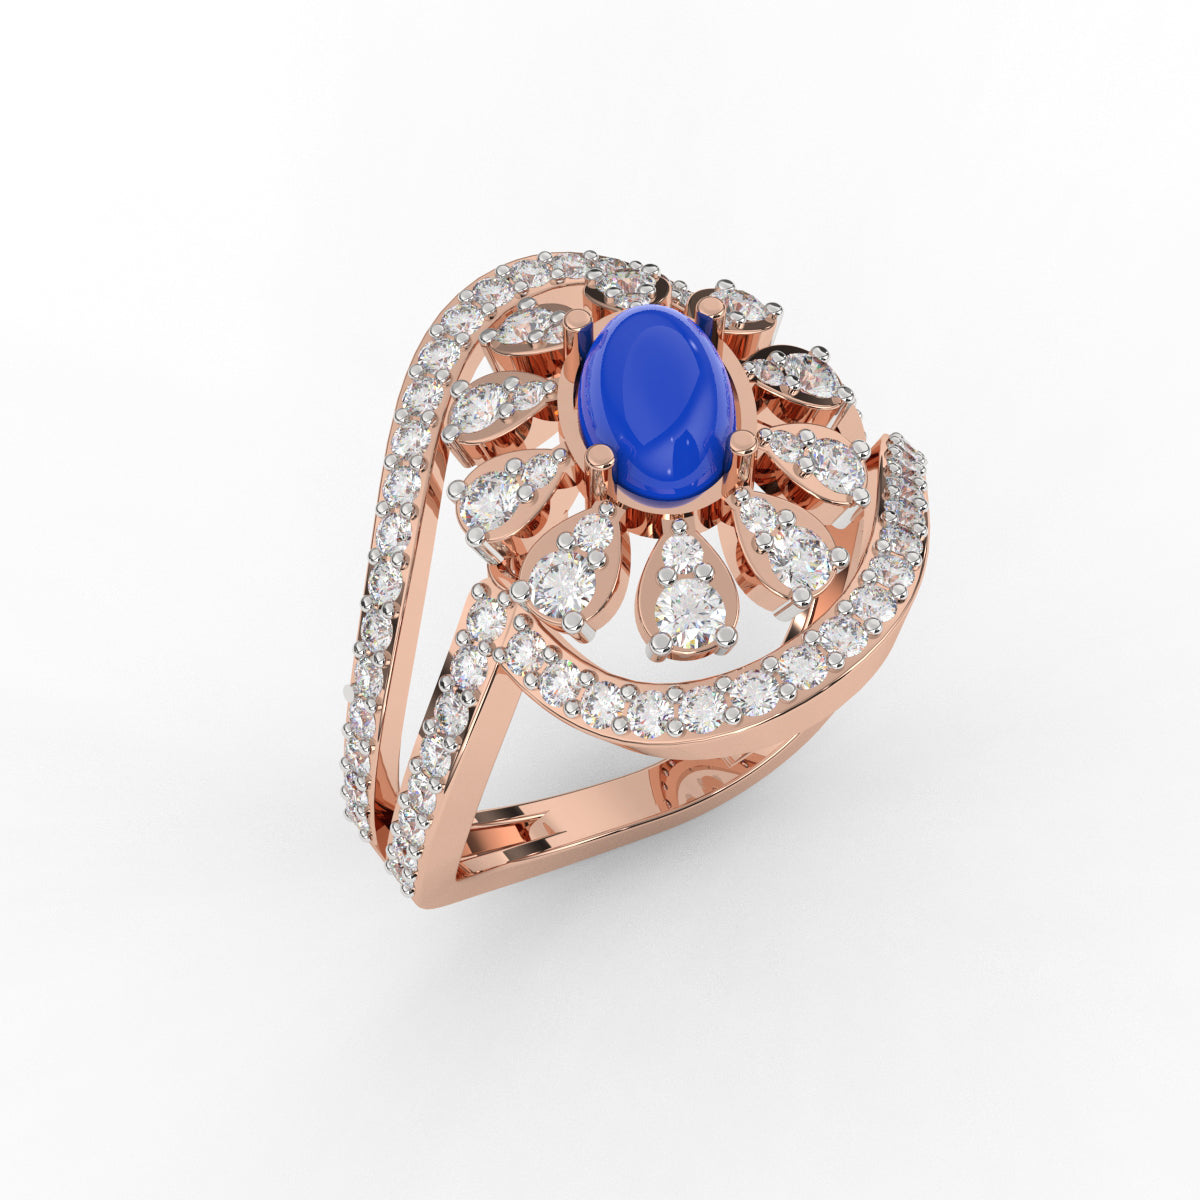 Deco Art Diamond Ring